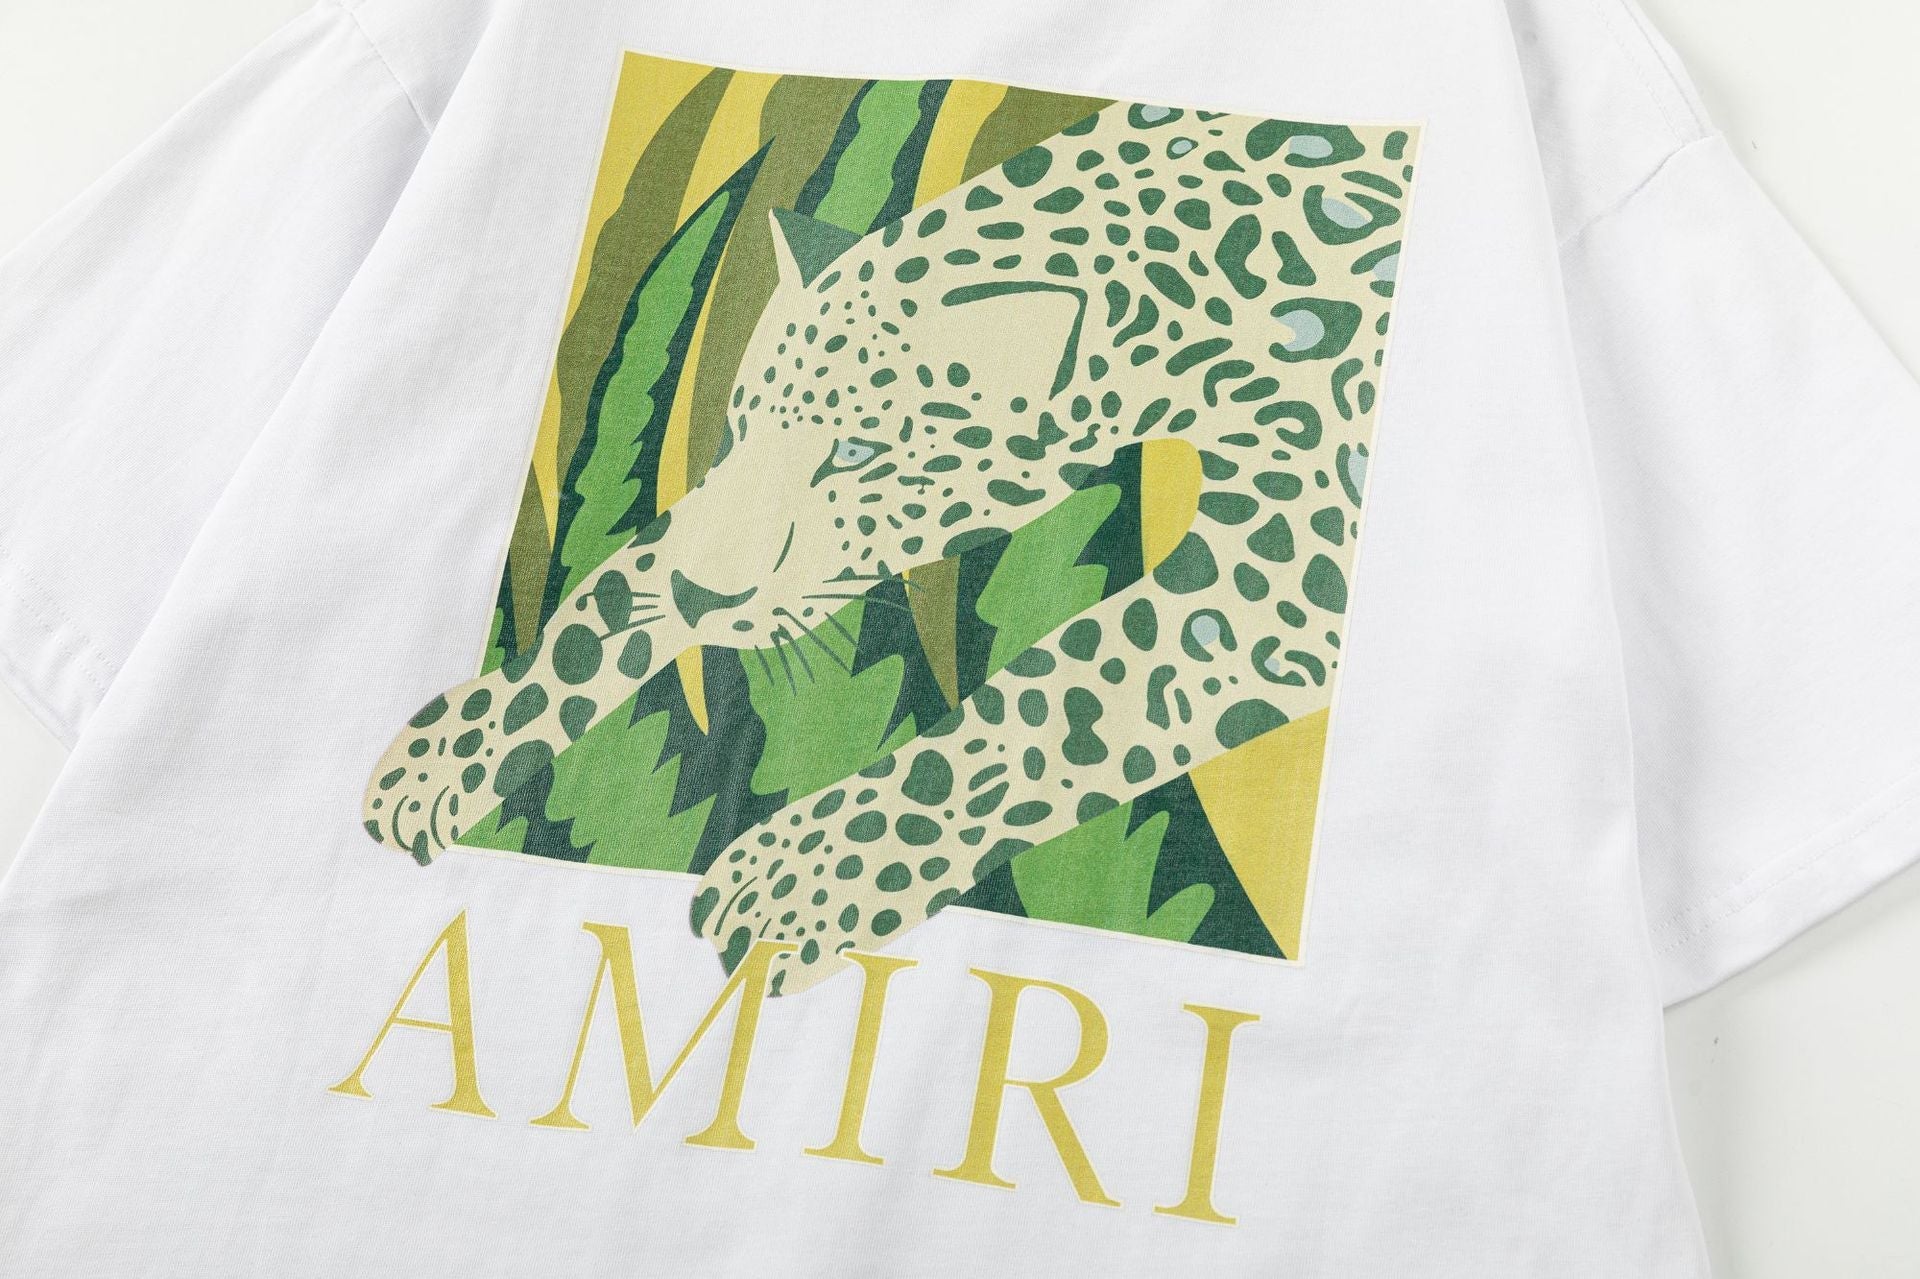 Amiri Men's Black Leopard T-shirt